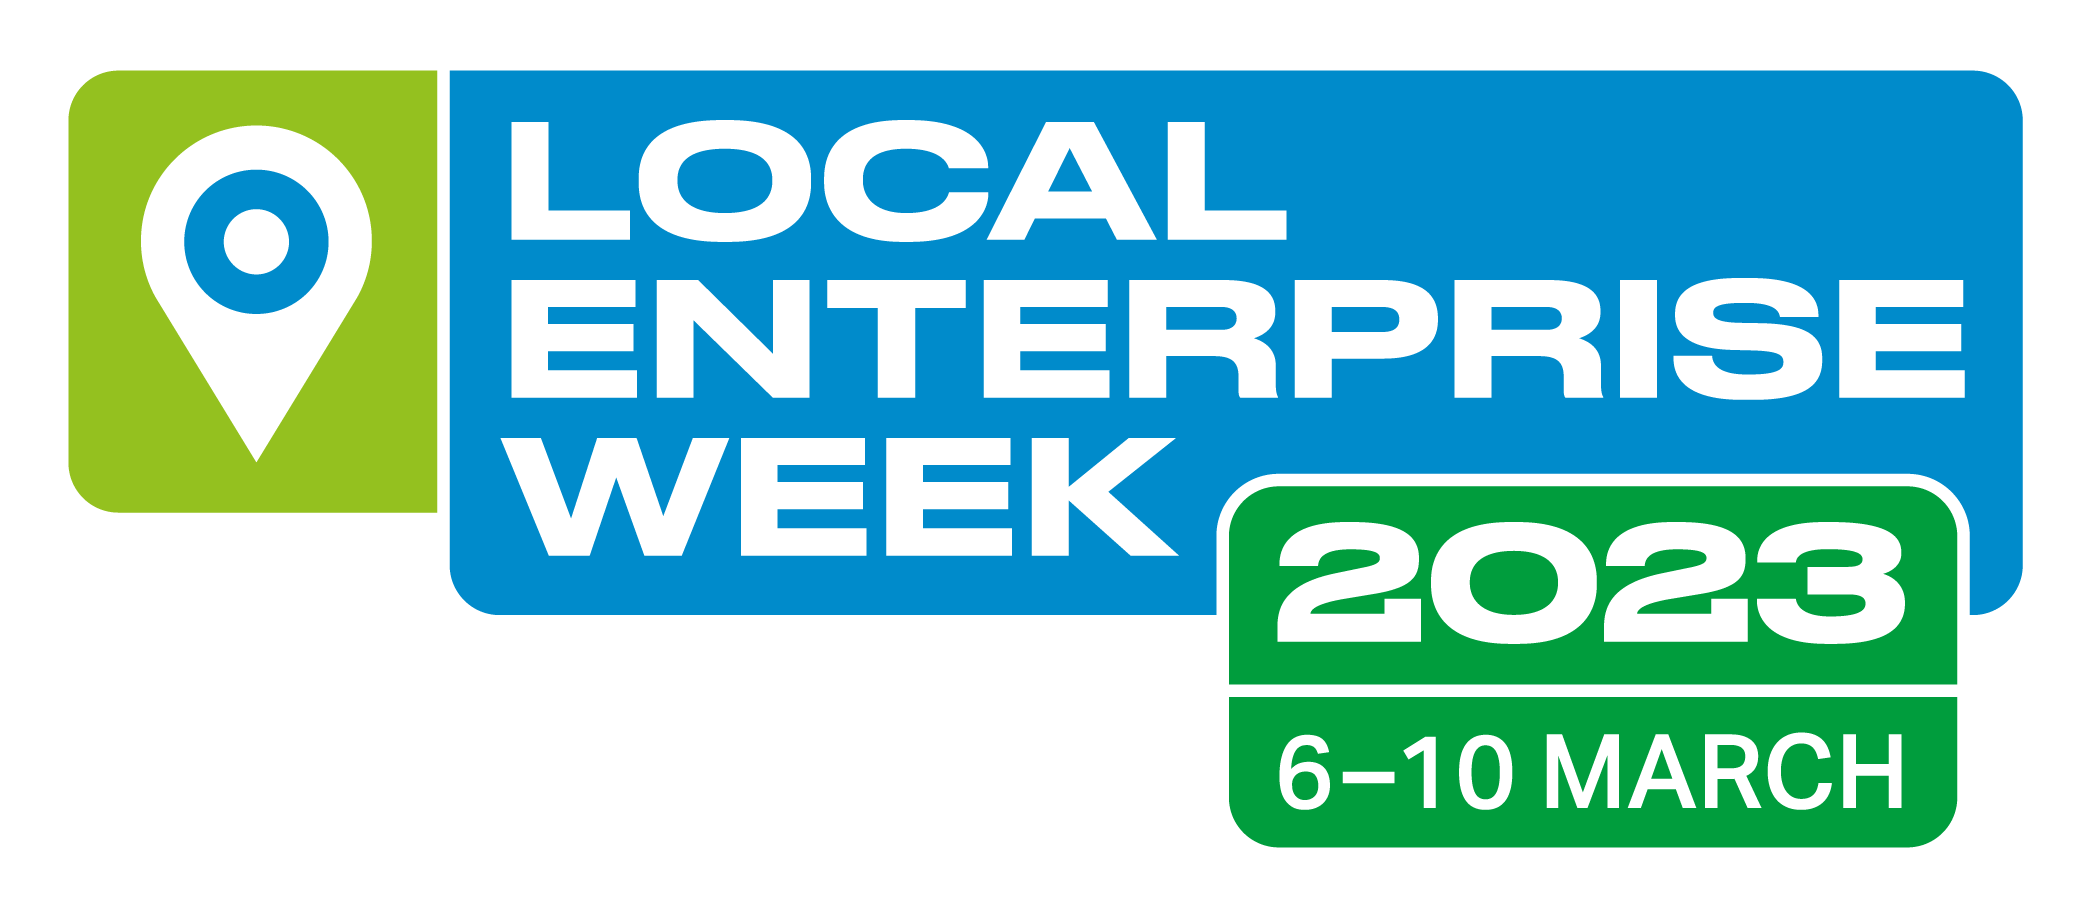 Local Enterprise Week 2023 South Dublin Events - Local Enterprise ...